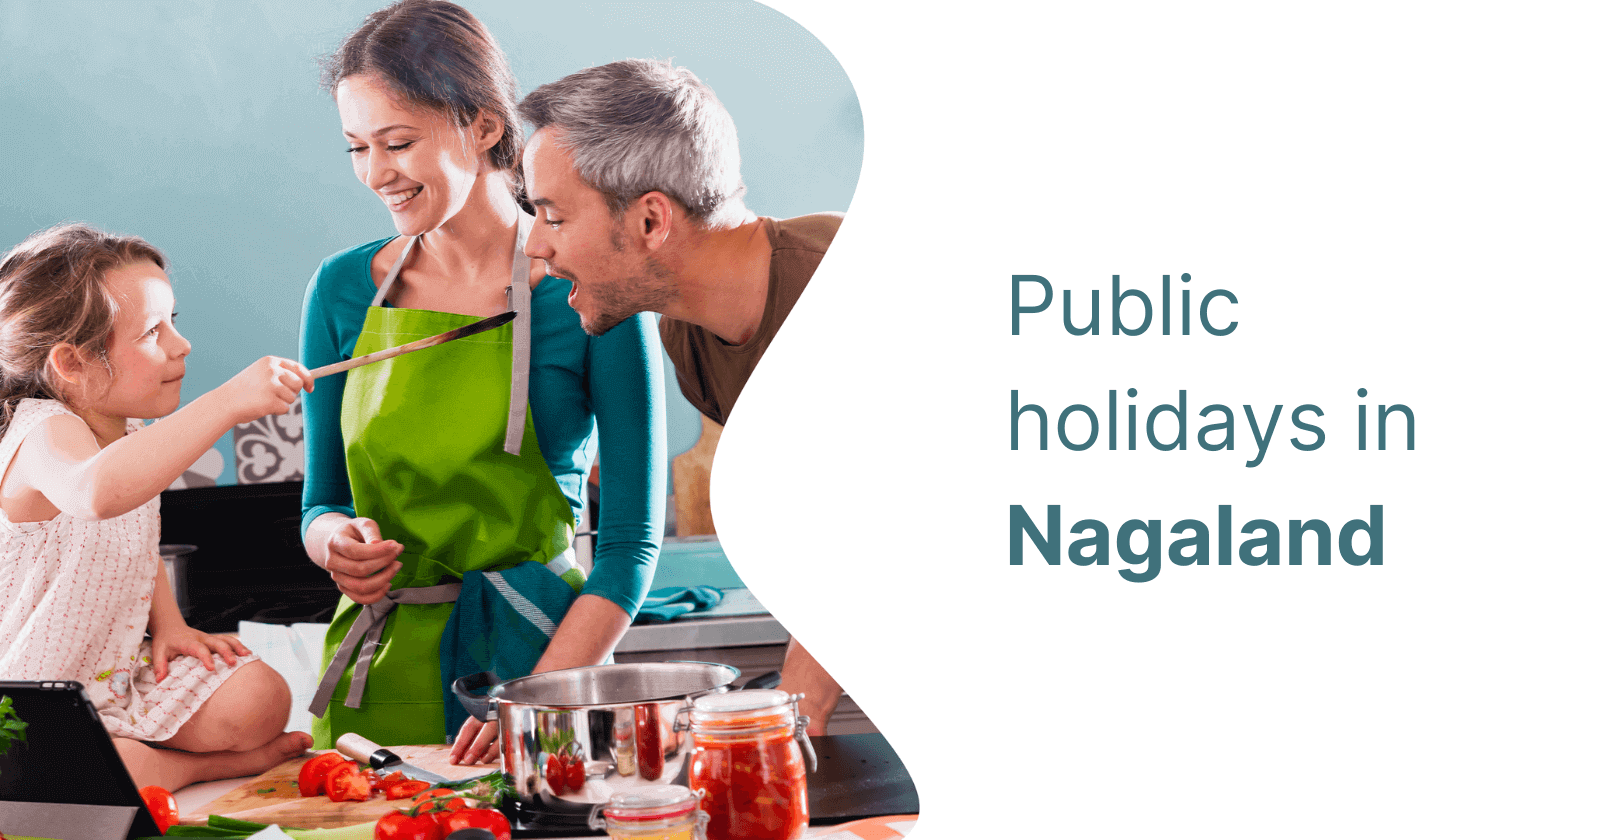 Nagaland Holidays: List of Public Holidays in Nagaland in 2023